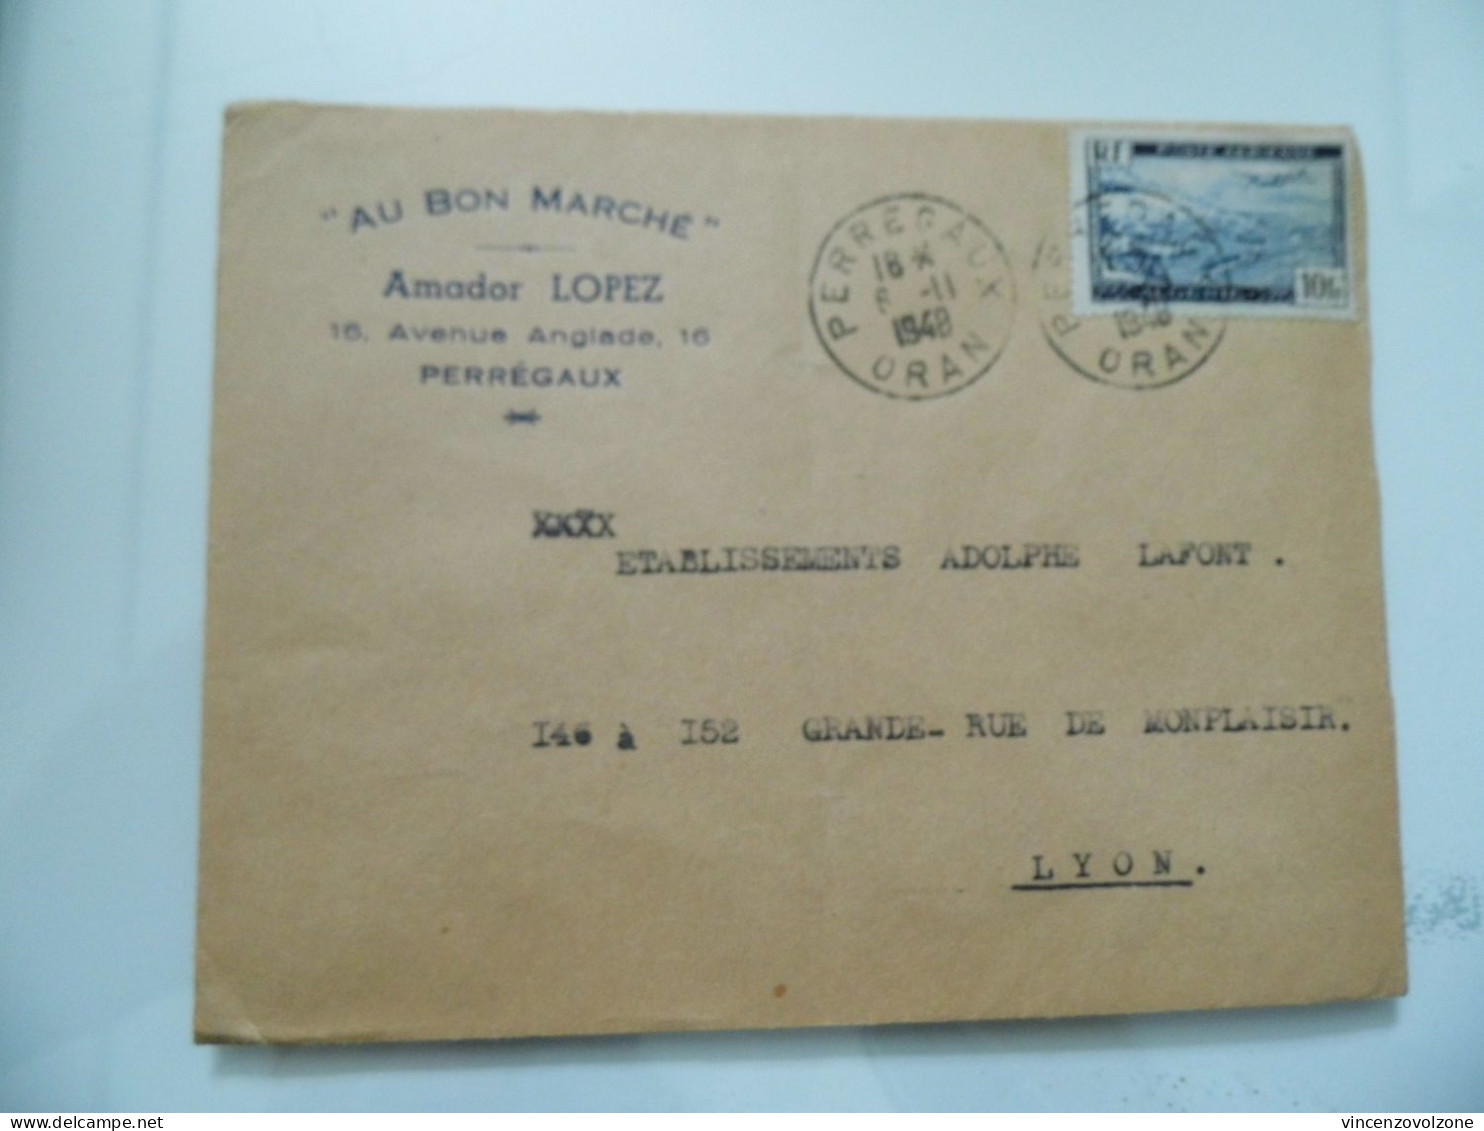 Busta Viaggiata Per La Francia Posta Aerea "AU BONNE MARCHE' Amador LOPEZ PERREGAUX" 1948 - Luchtpost